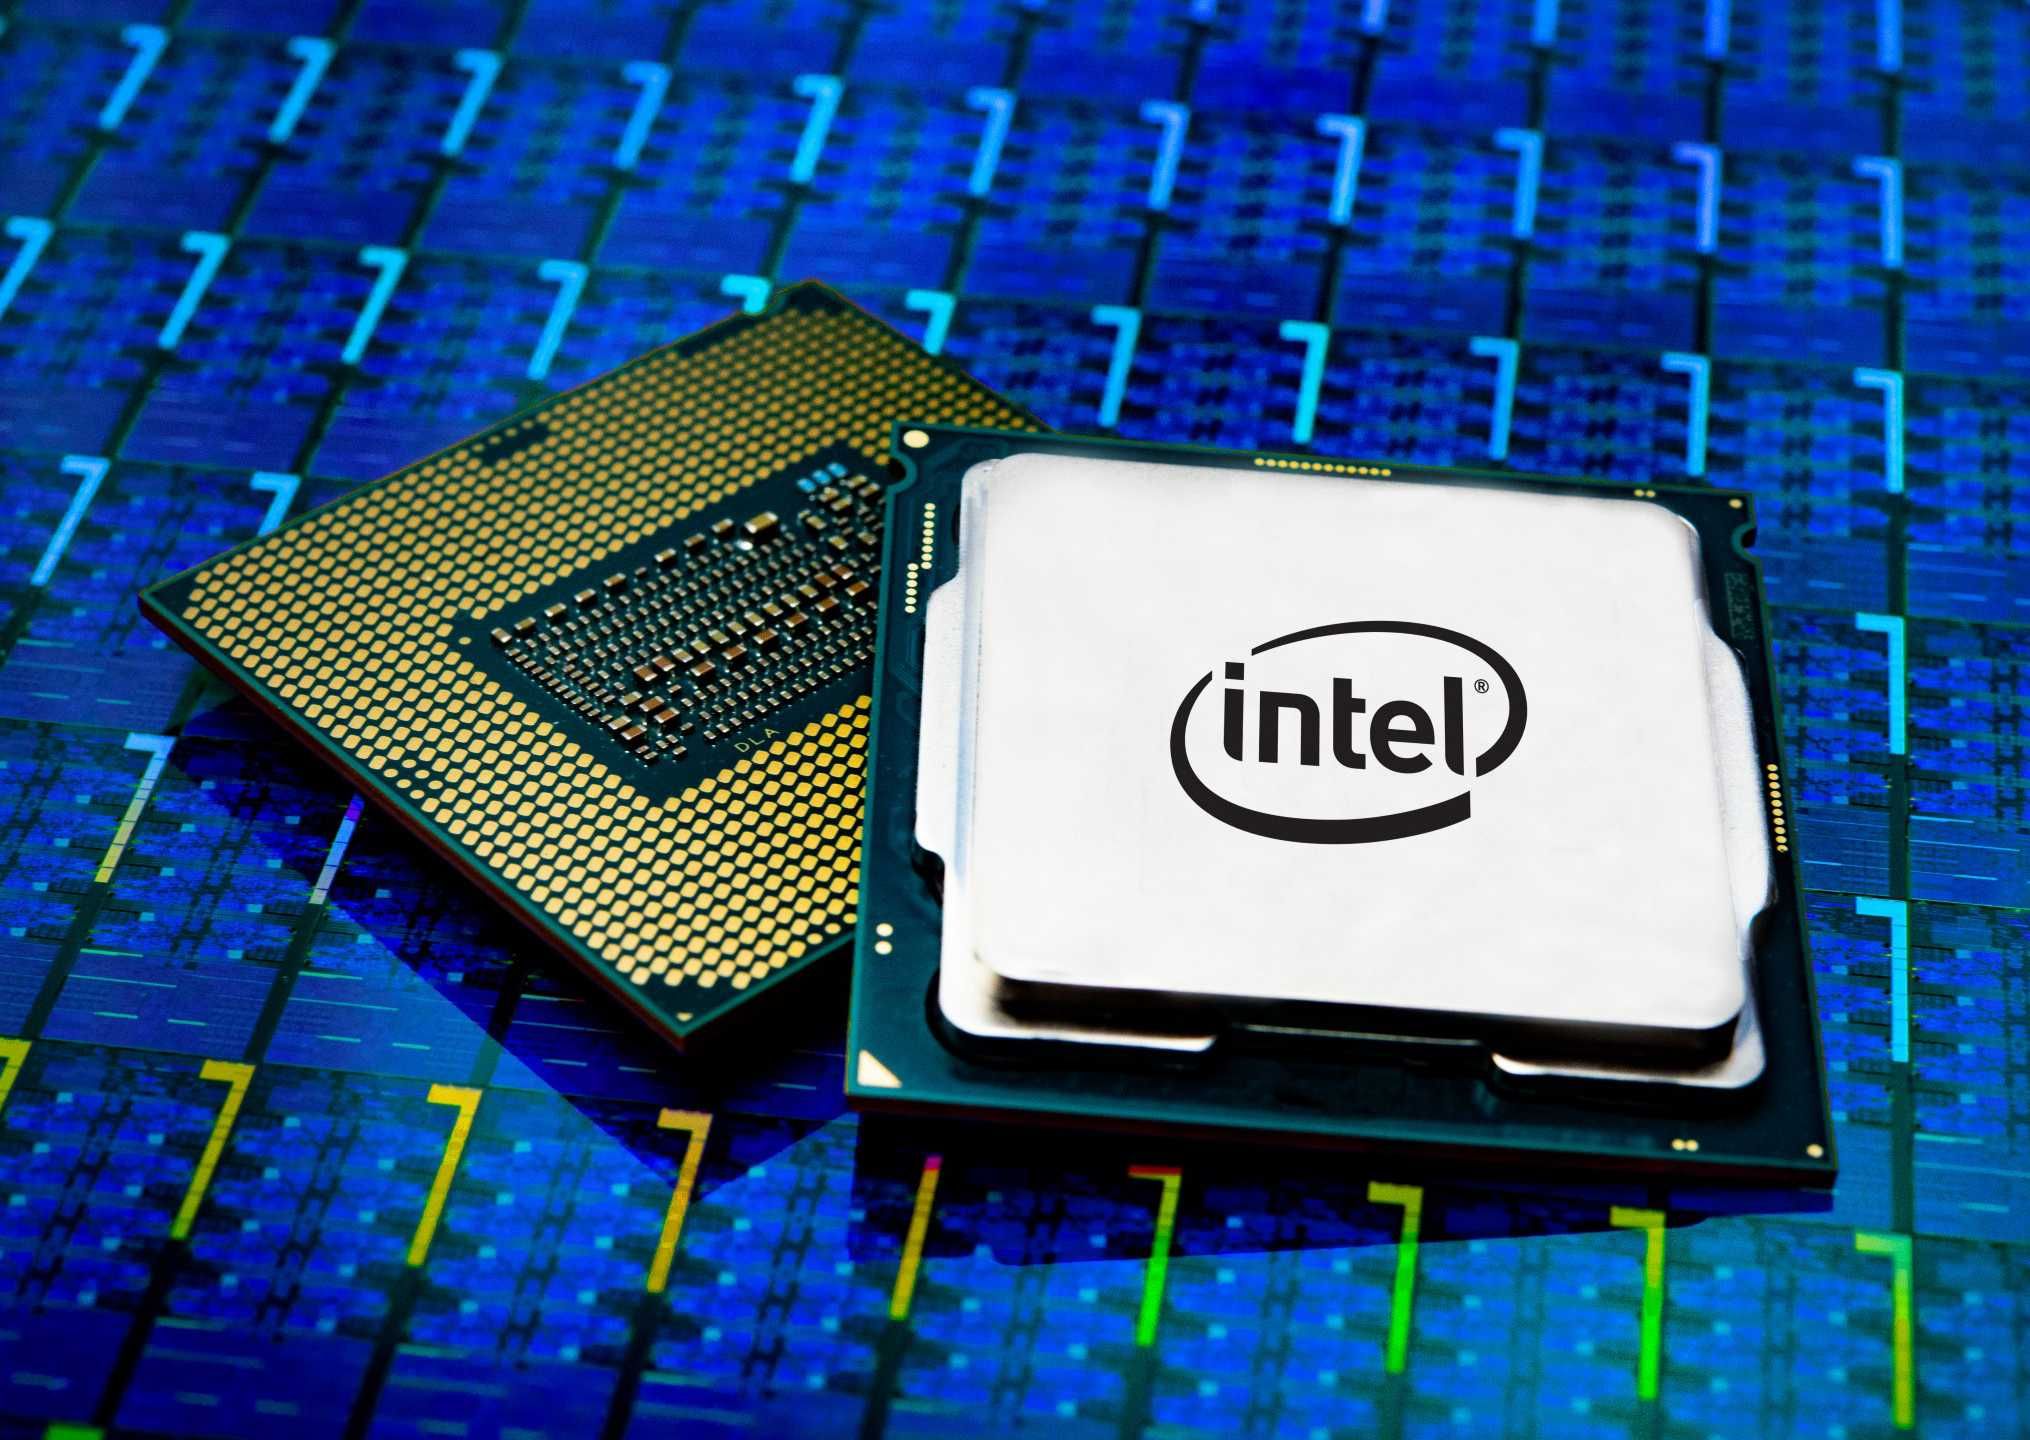 Процессор Intel Celeron 430 1,80GHz model sl9xn costa rica интел 775 !